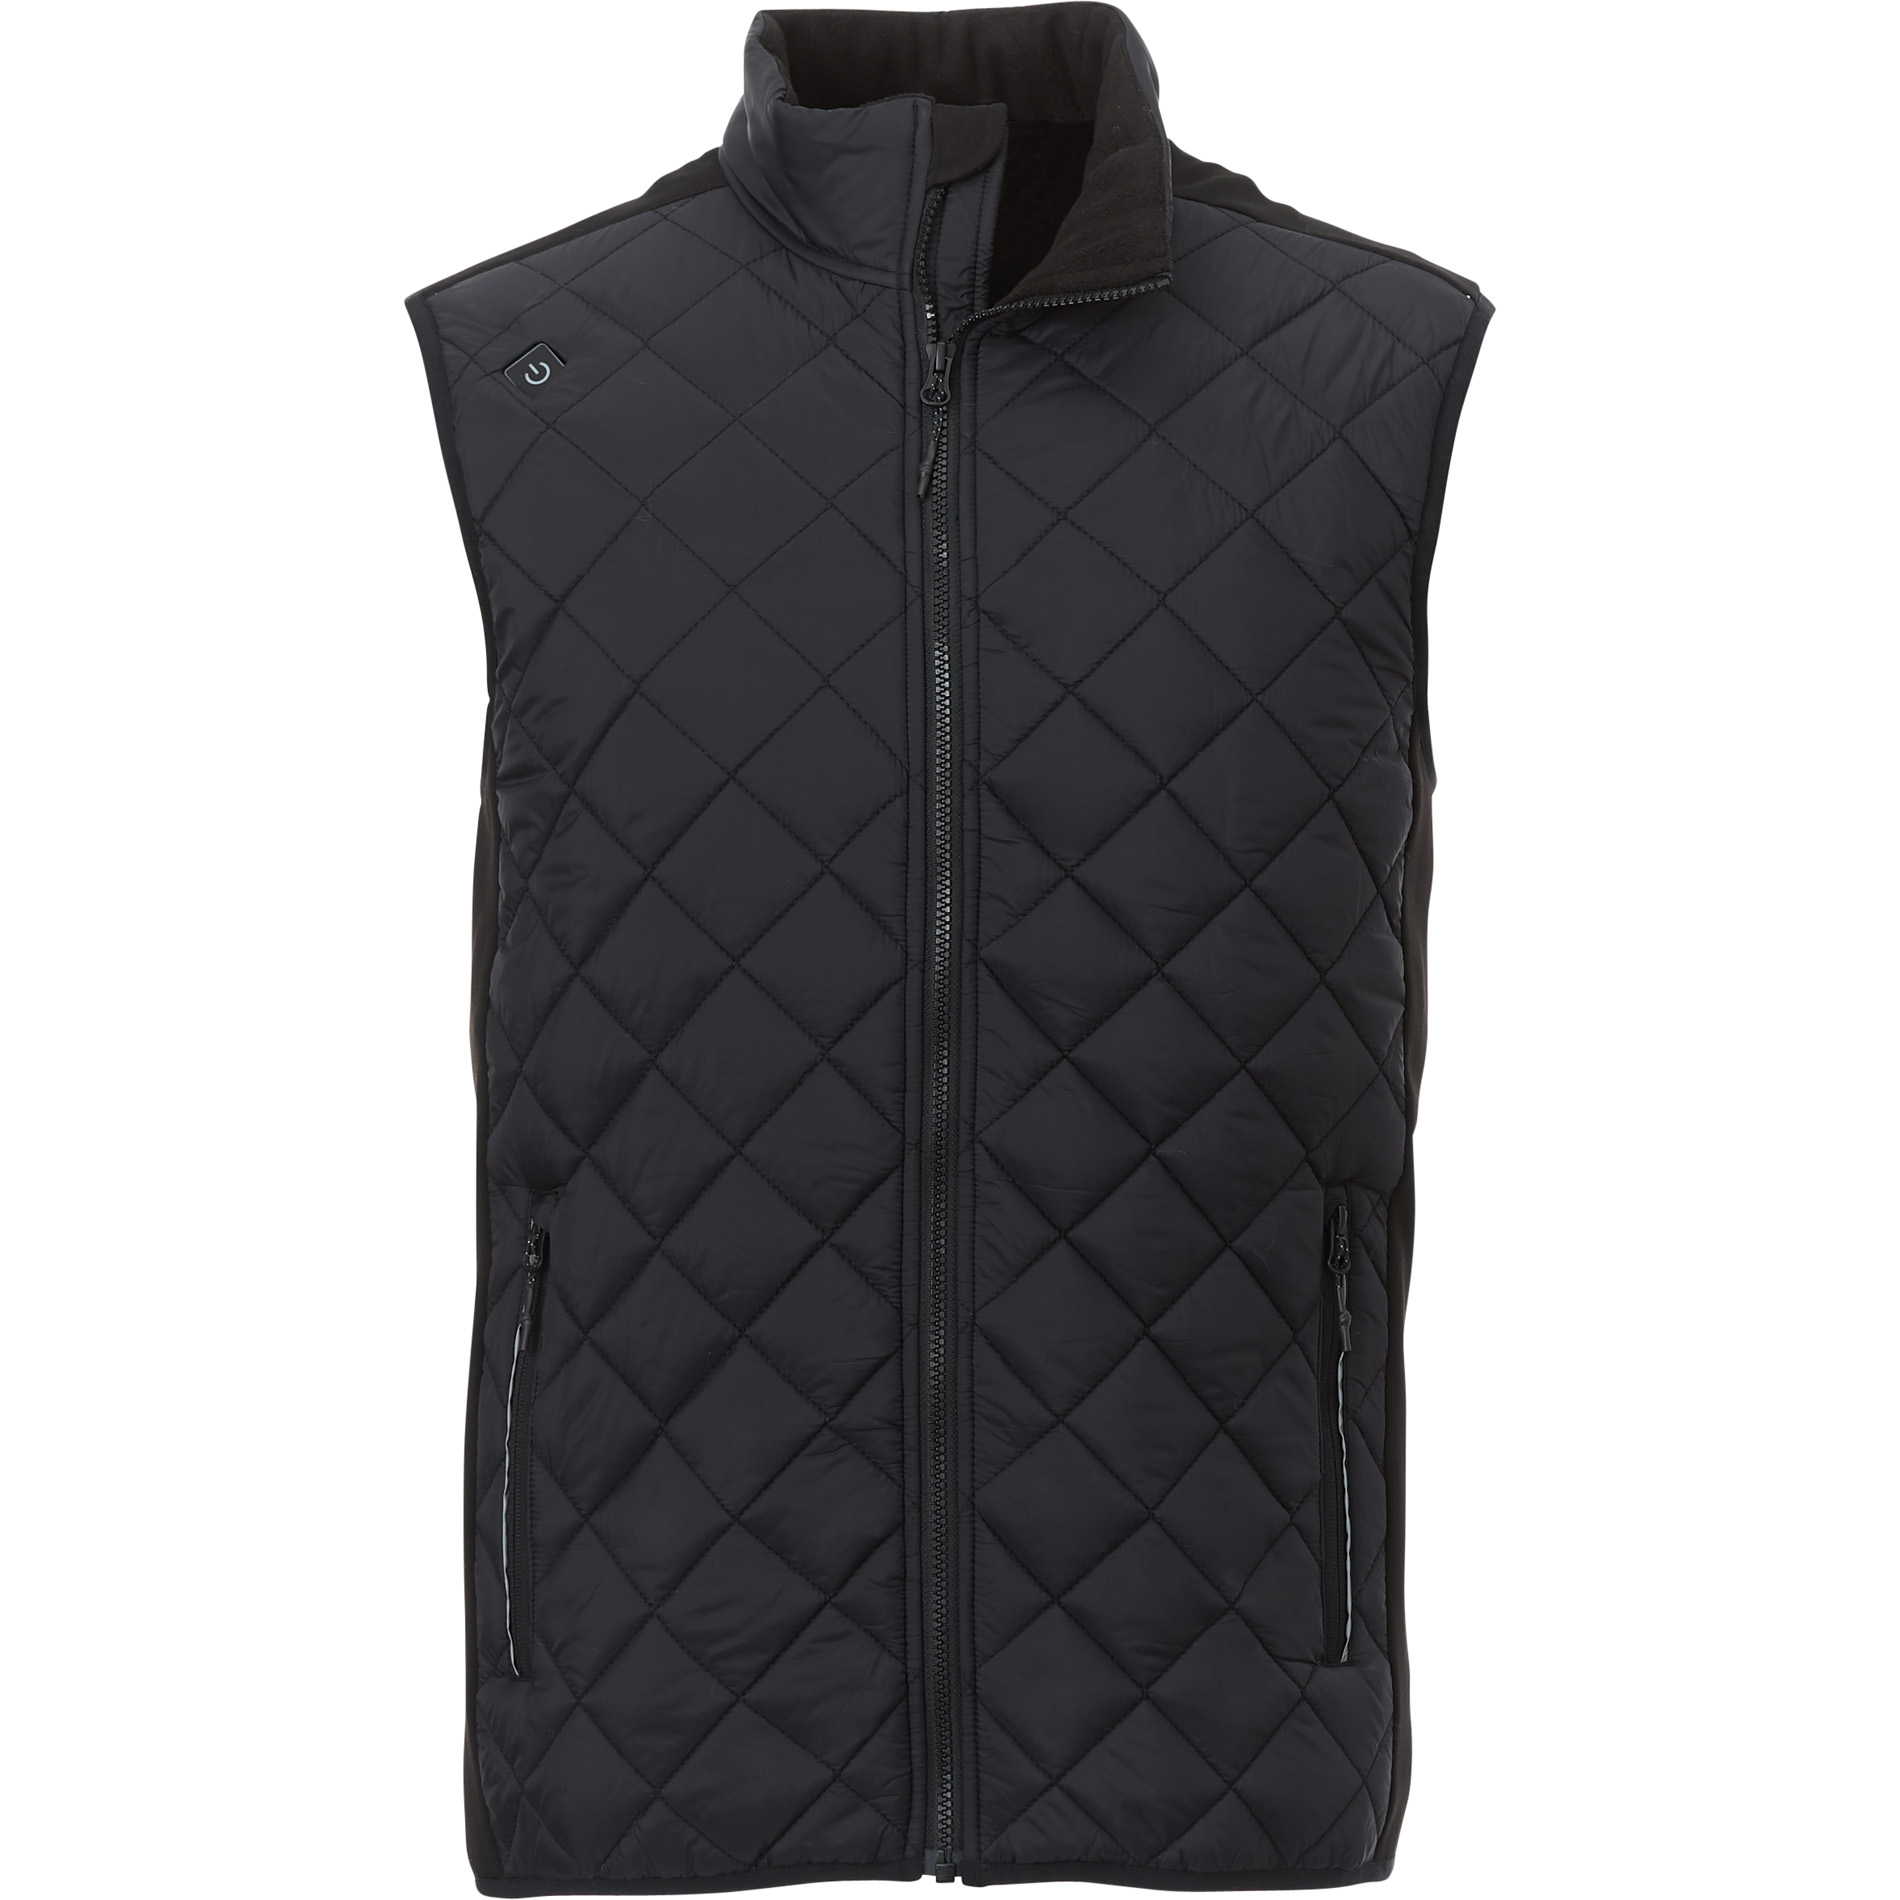 Trimark TM19548 - Men's SHEFFORD Heat Panel Vest $140.12 - Outerwear